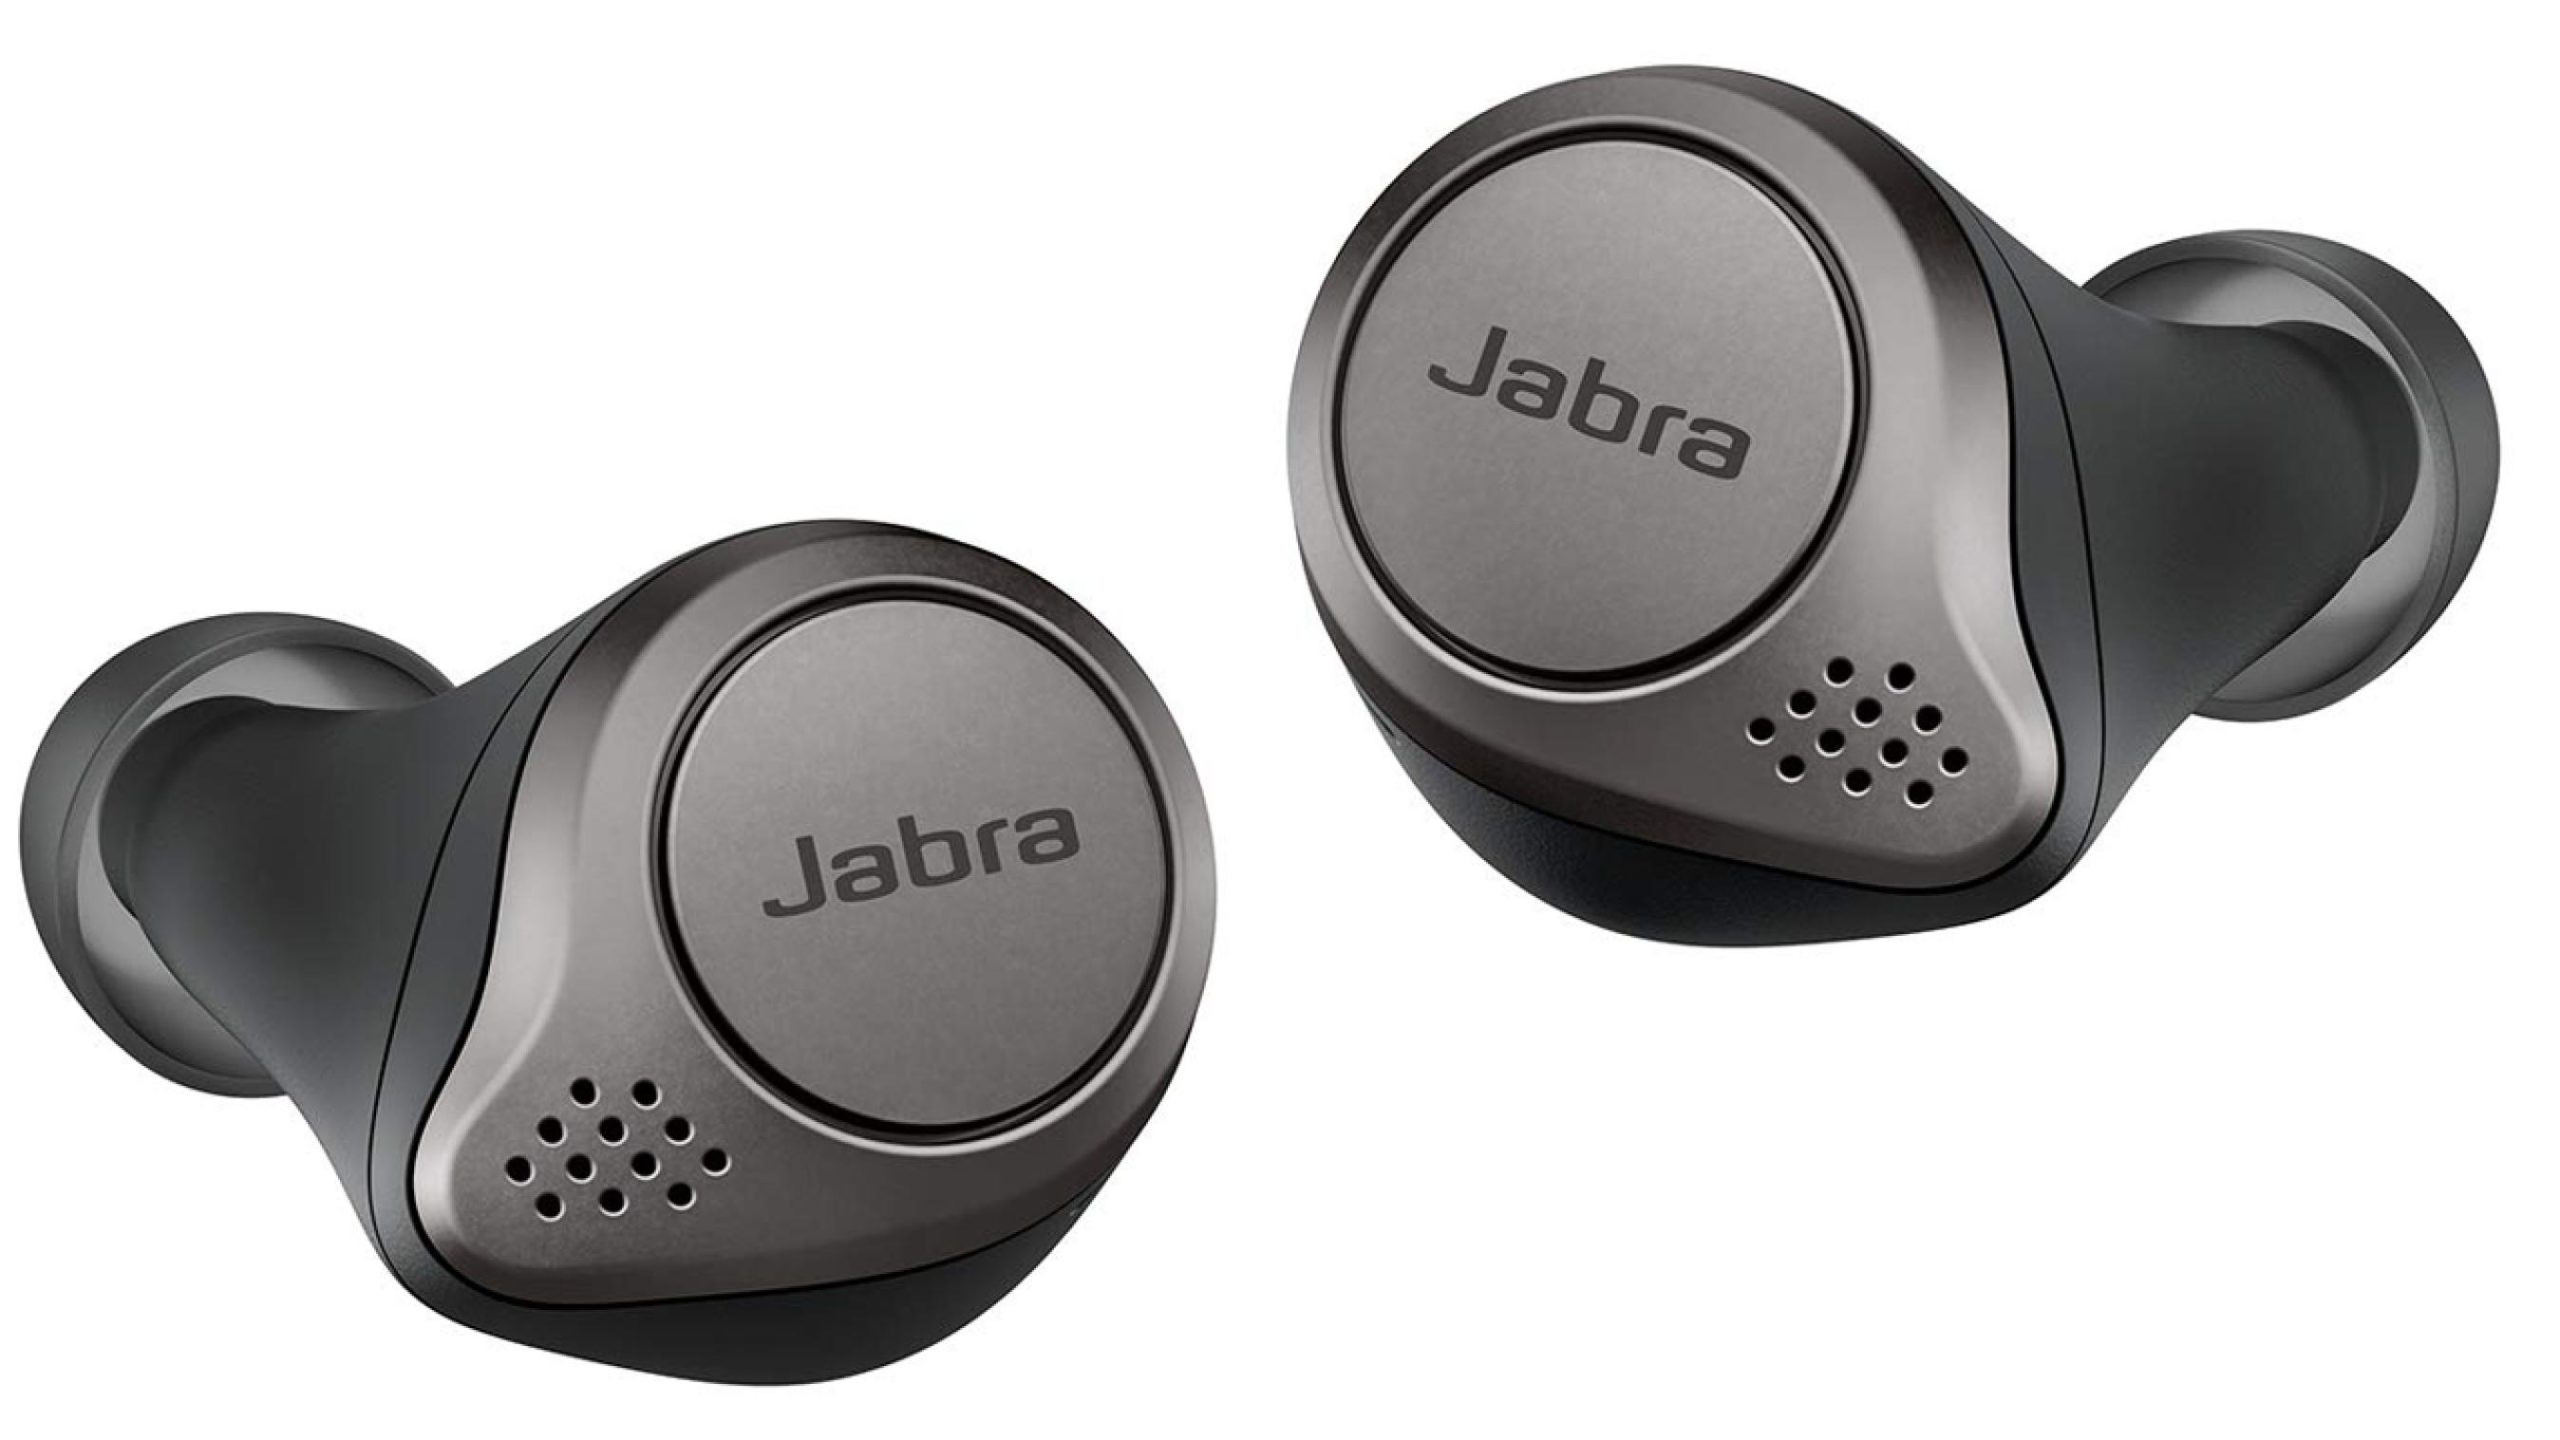 HF Bluetooth Jabra Elite 75t Titanium Black (SN)